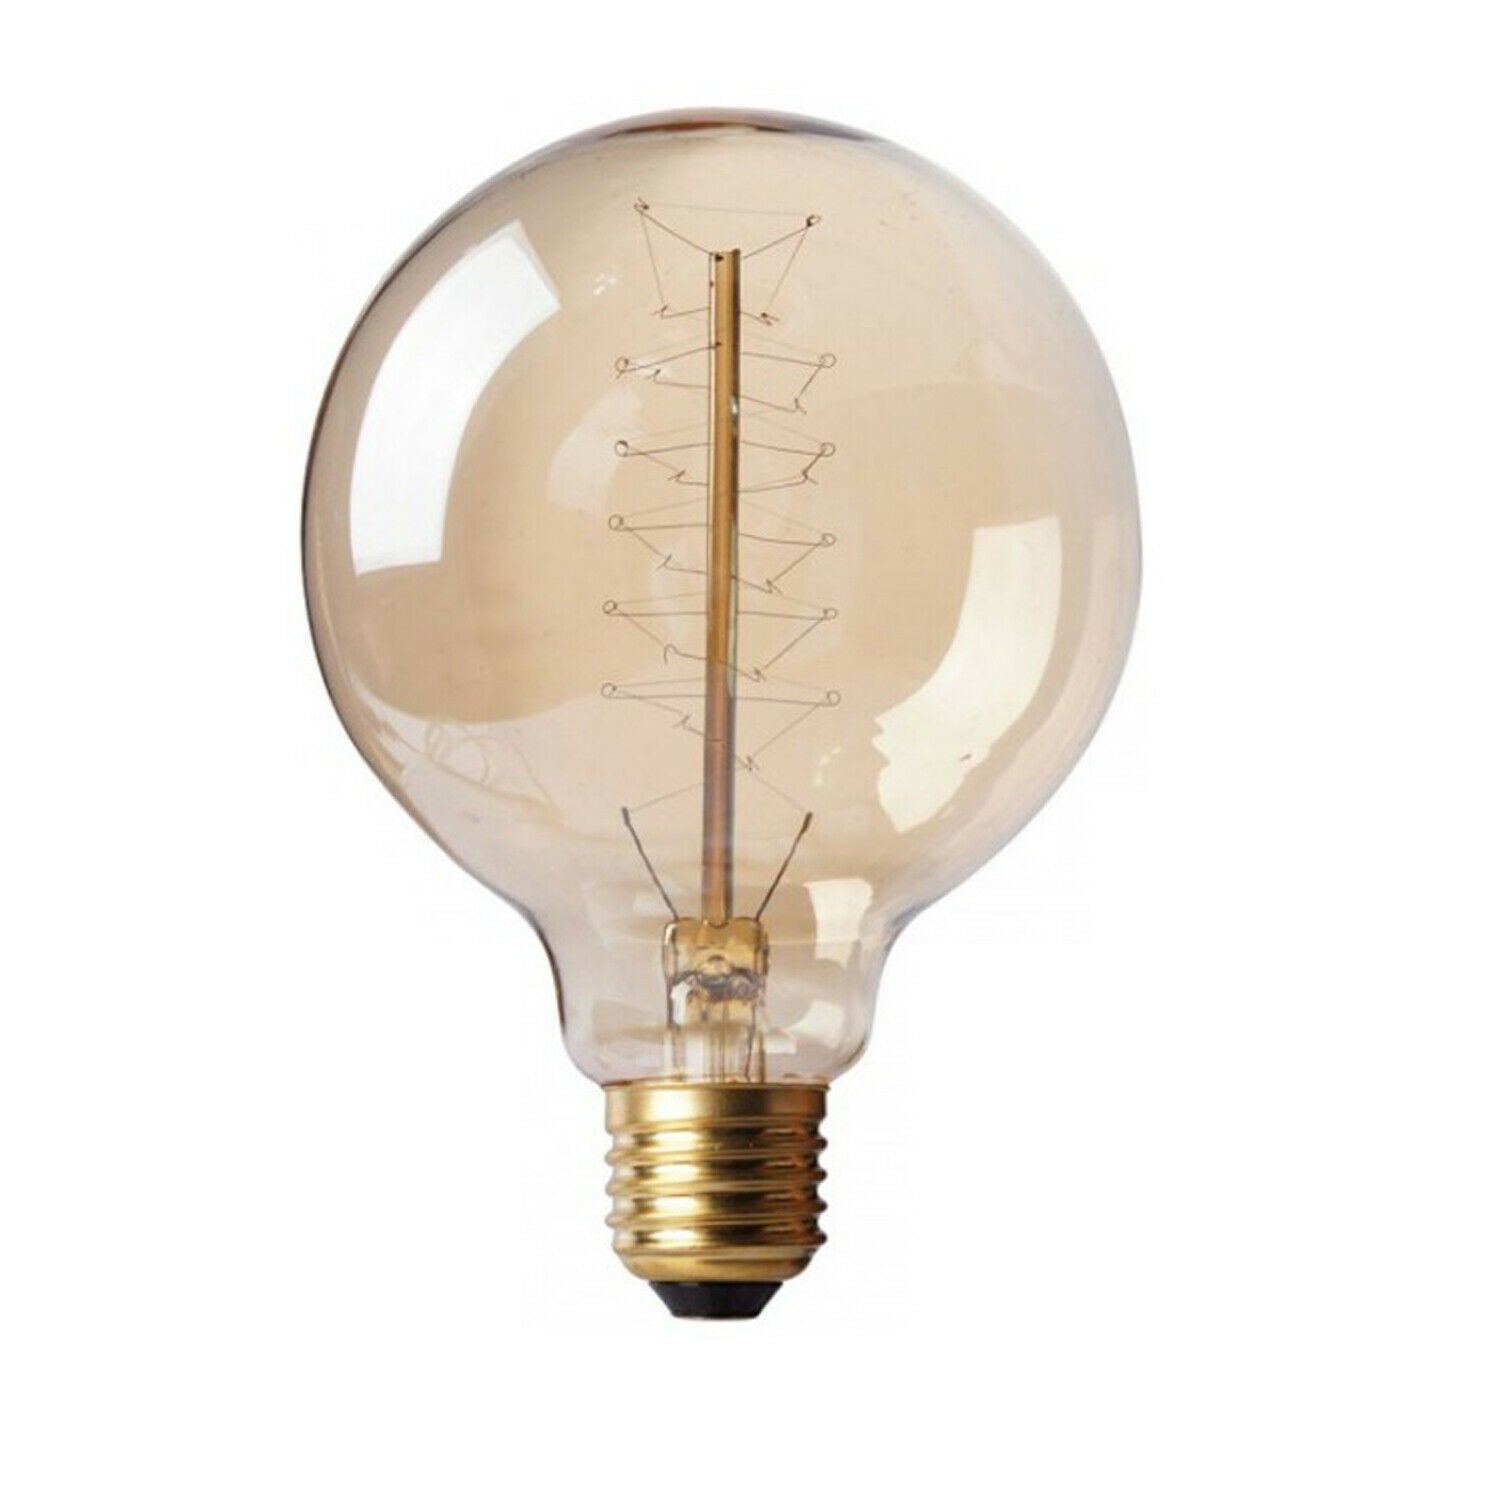 G95 E27 60W Edison Antique Filament Spiral Lamp Light Bulb